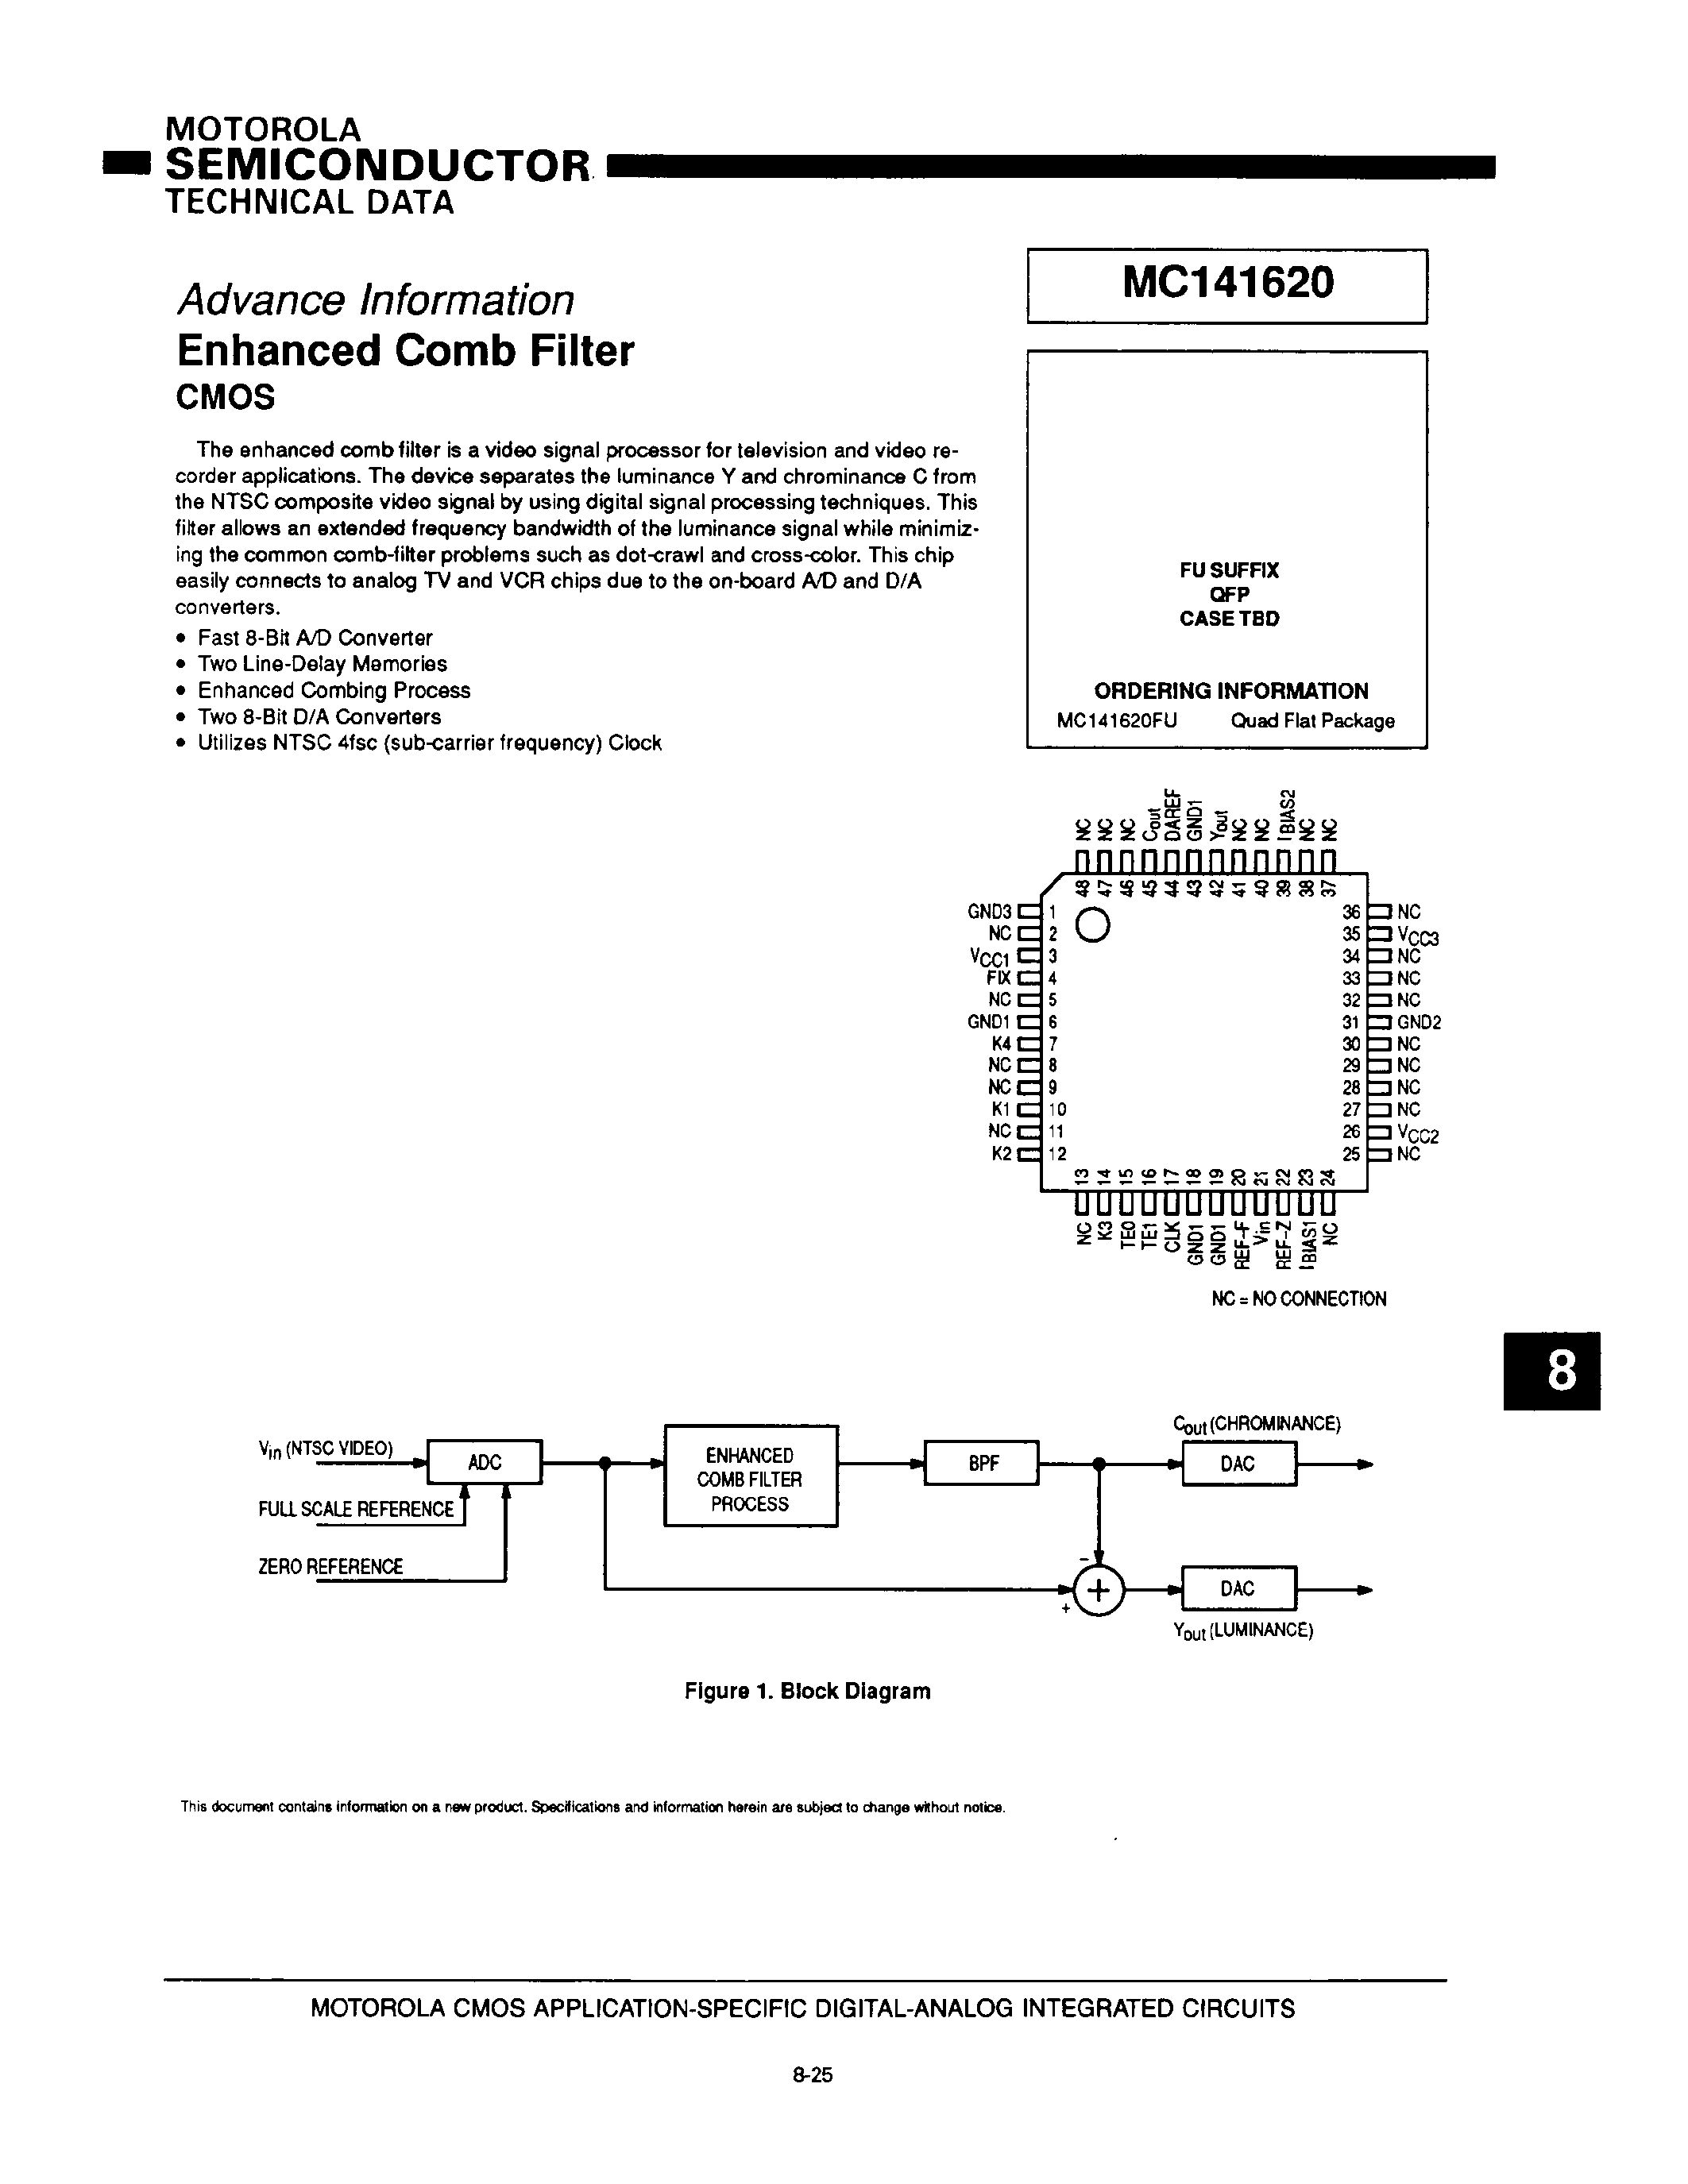 Datasheet MC141620FU - Enhanced Comb Filter page 1